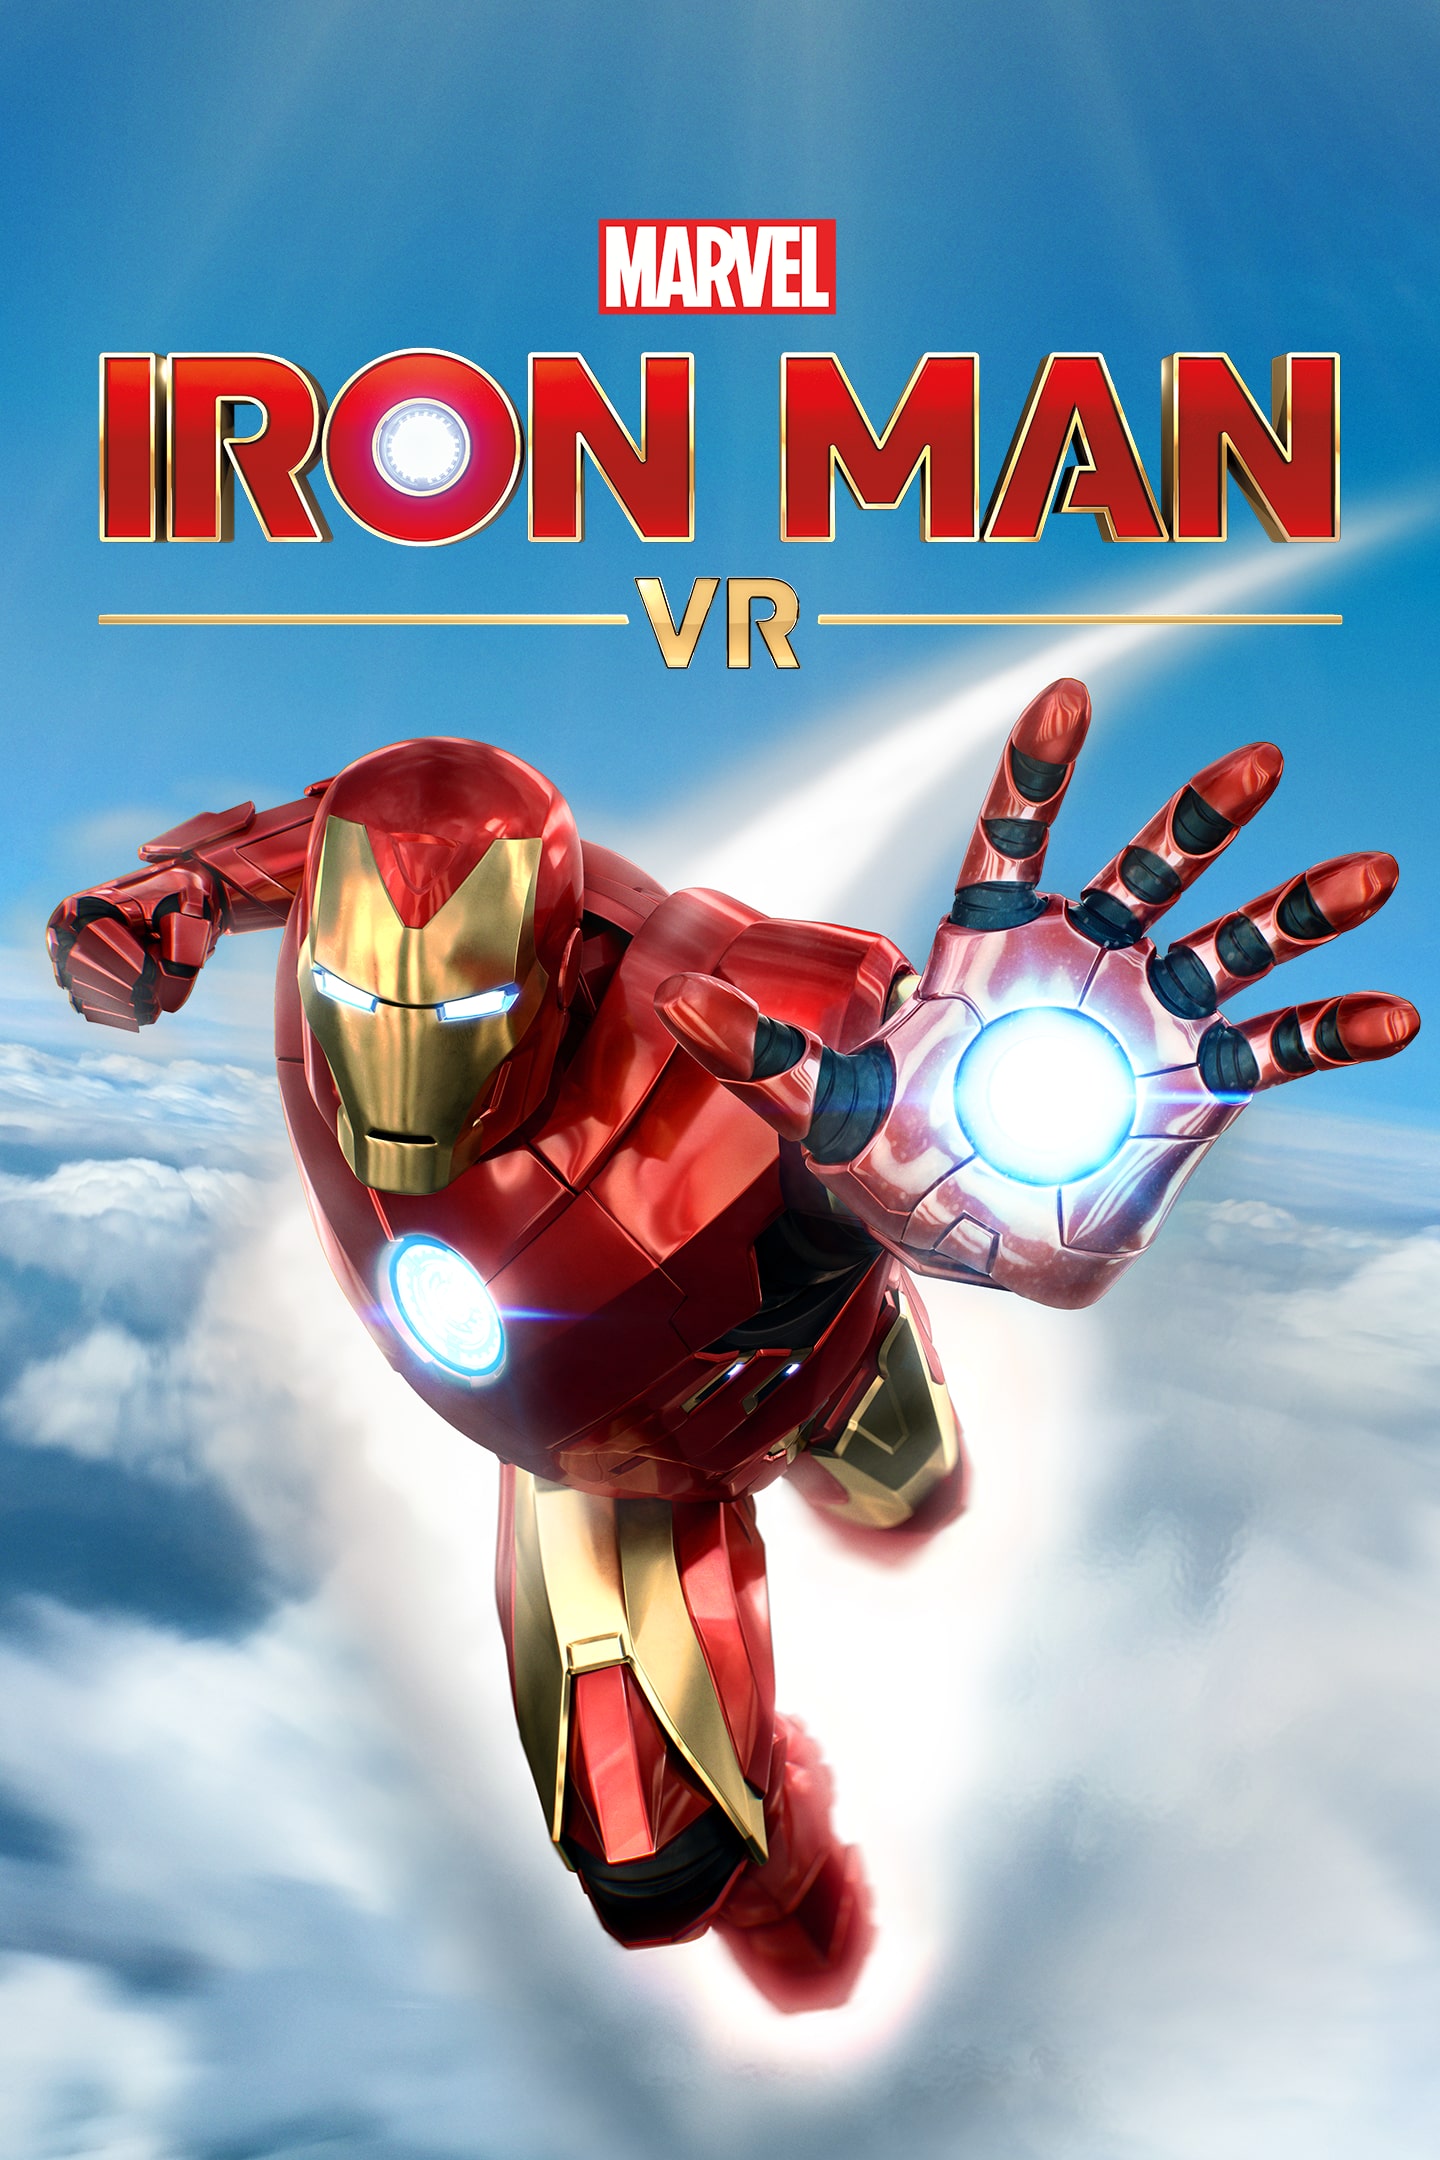 MARVELS IRON MAN VR PS4 